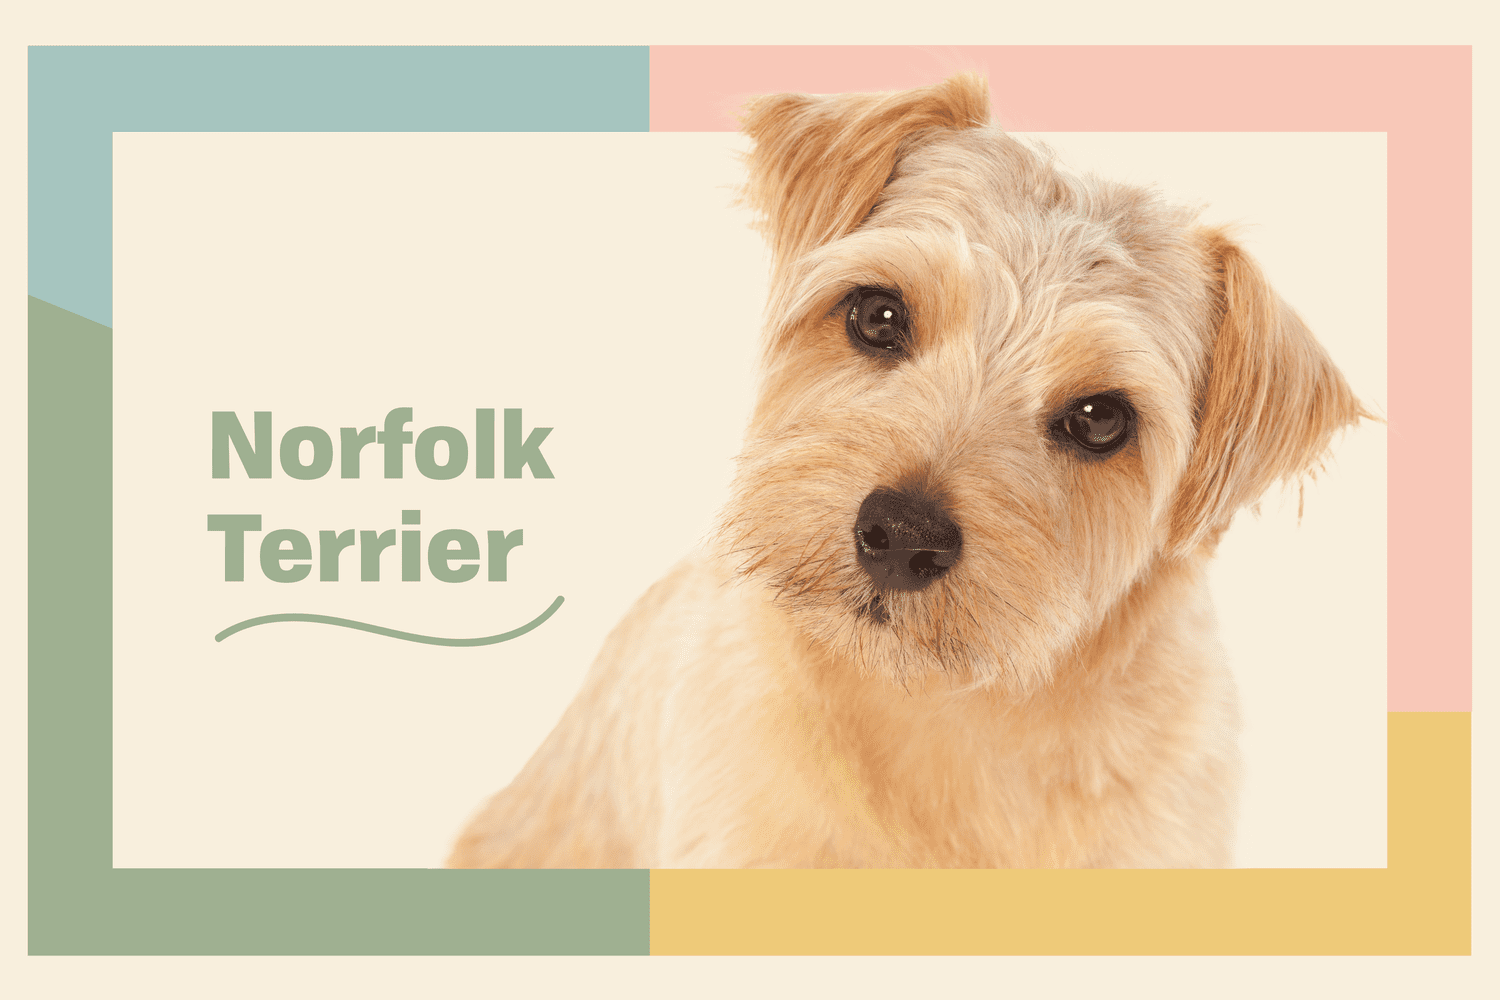 Profile treatment of blonde Norfolk terrier